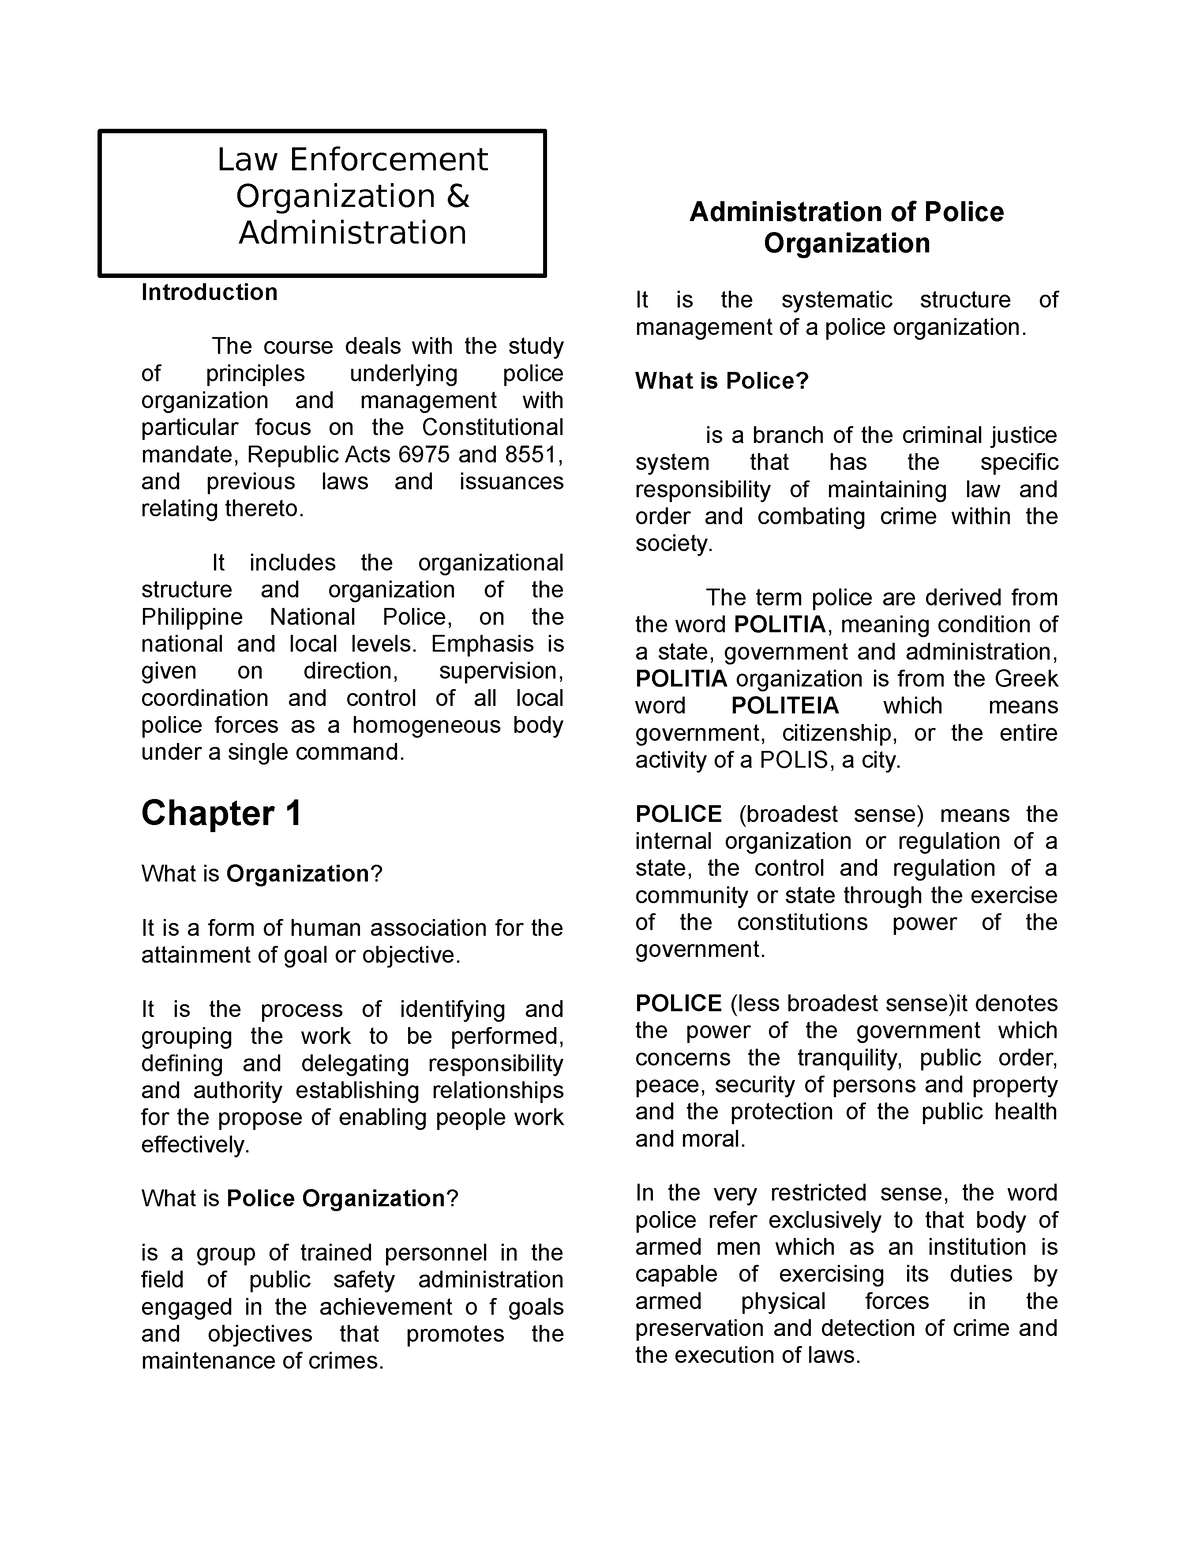 research paper topics about law enforcement